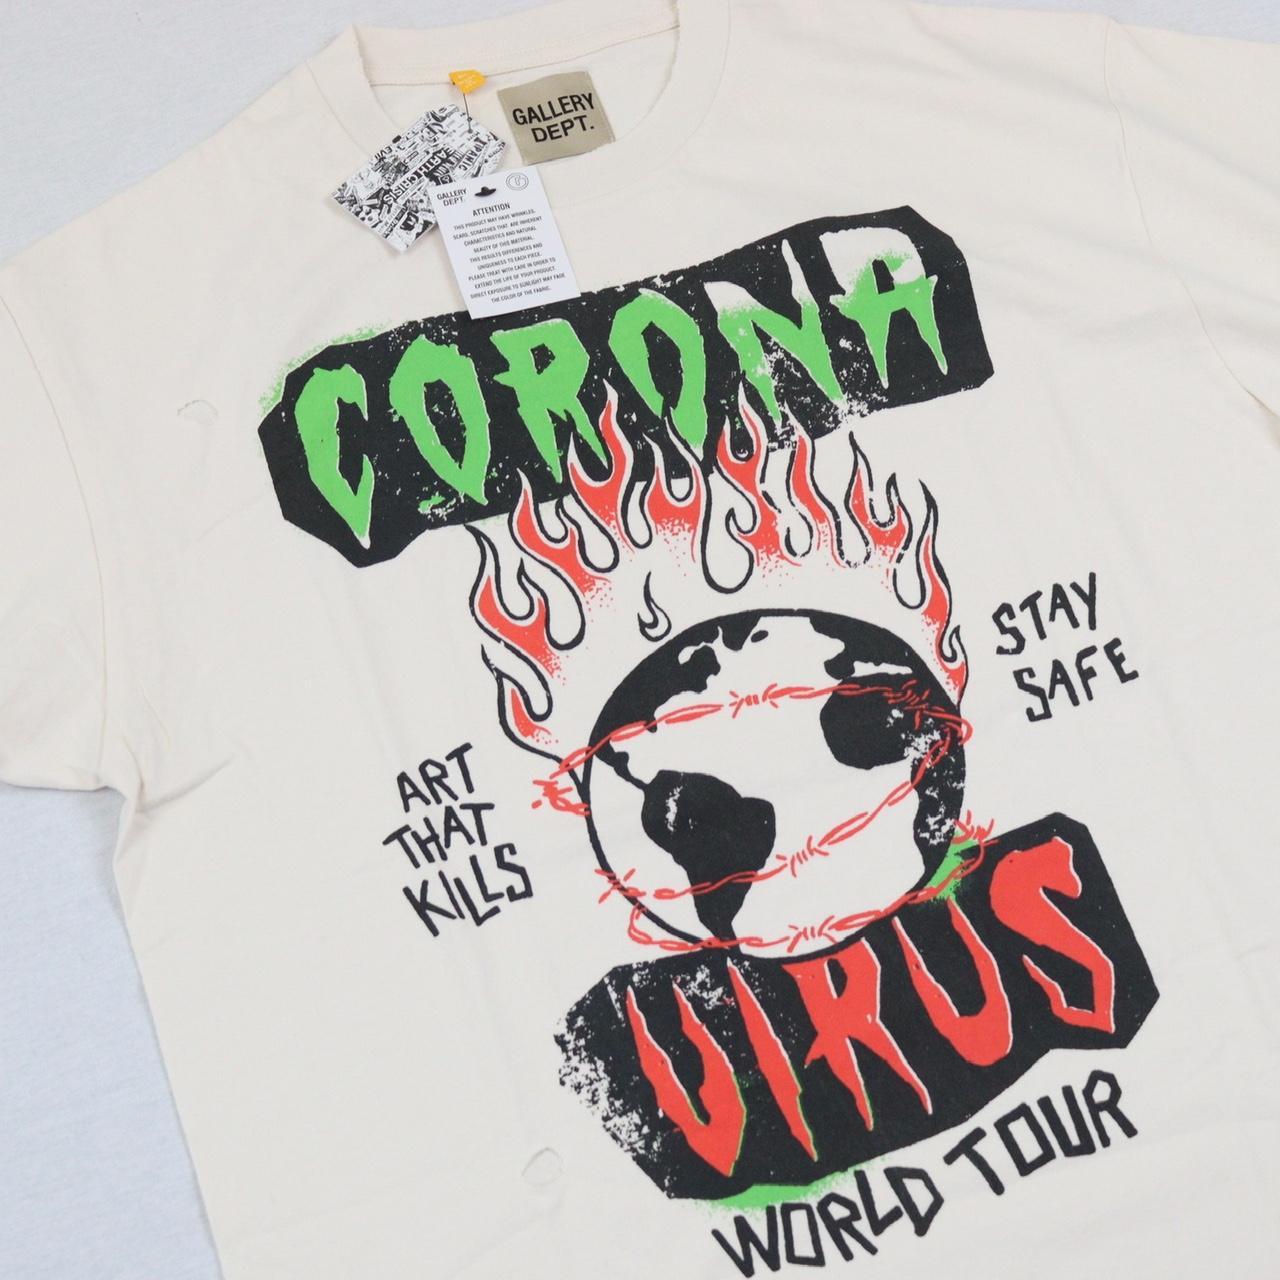 Gallery Dept. ATK Corona Tour T-shirt, White tee